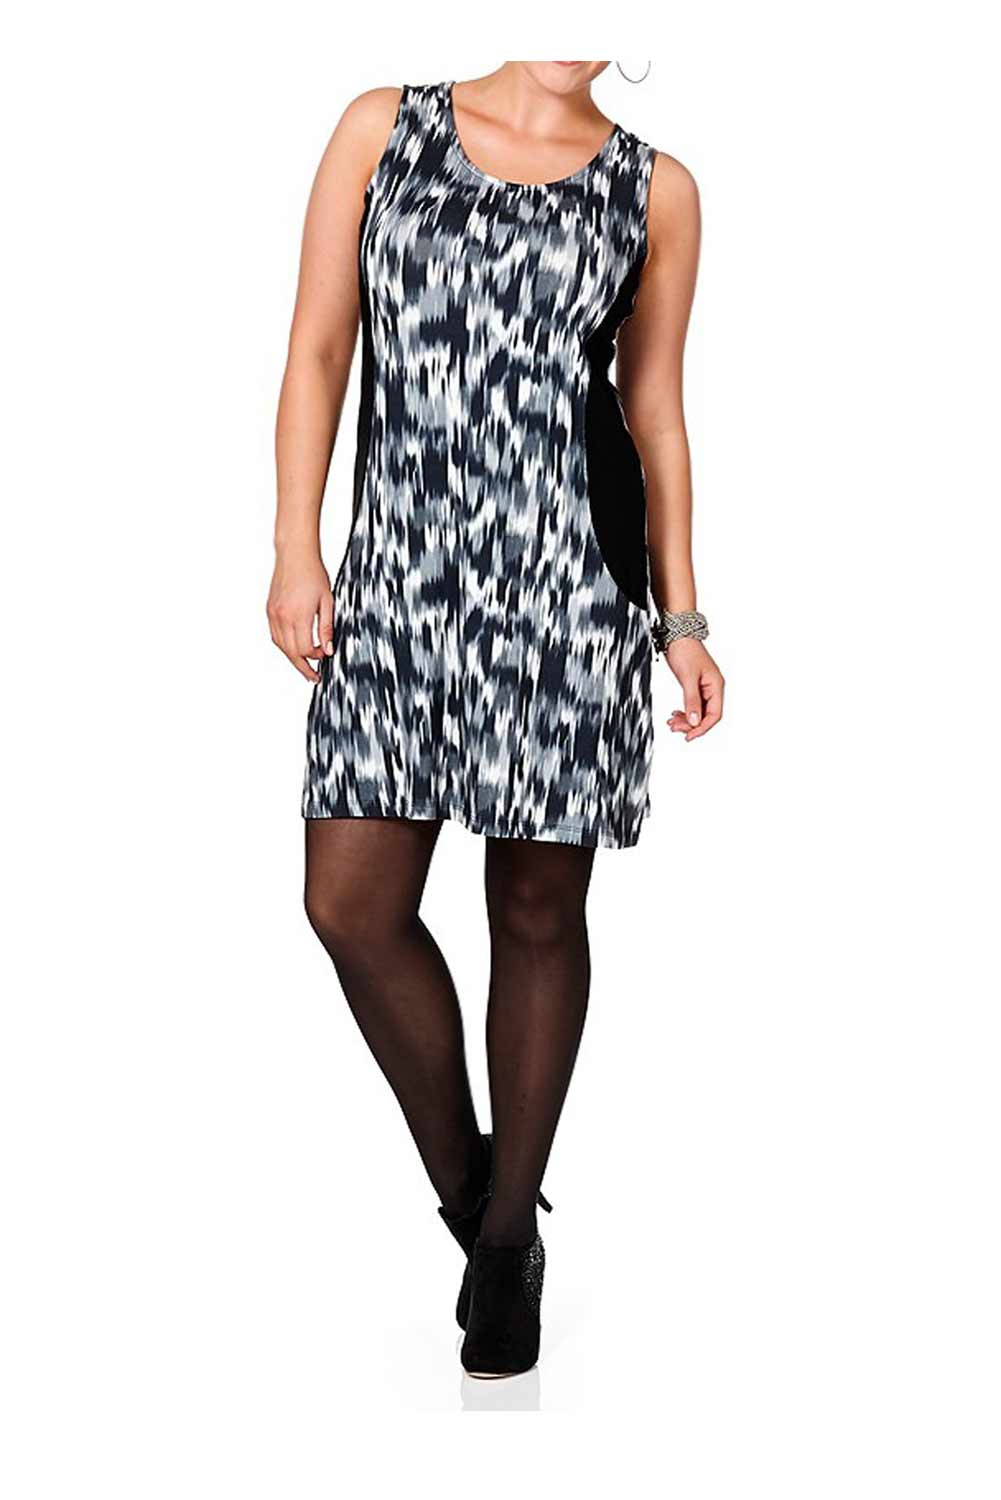 564.176 SHEEGO Damen-Kleid Schwarz-Grau Minikleid